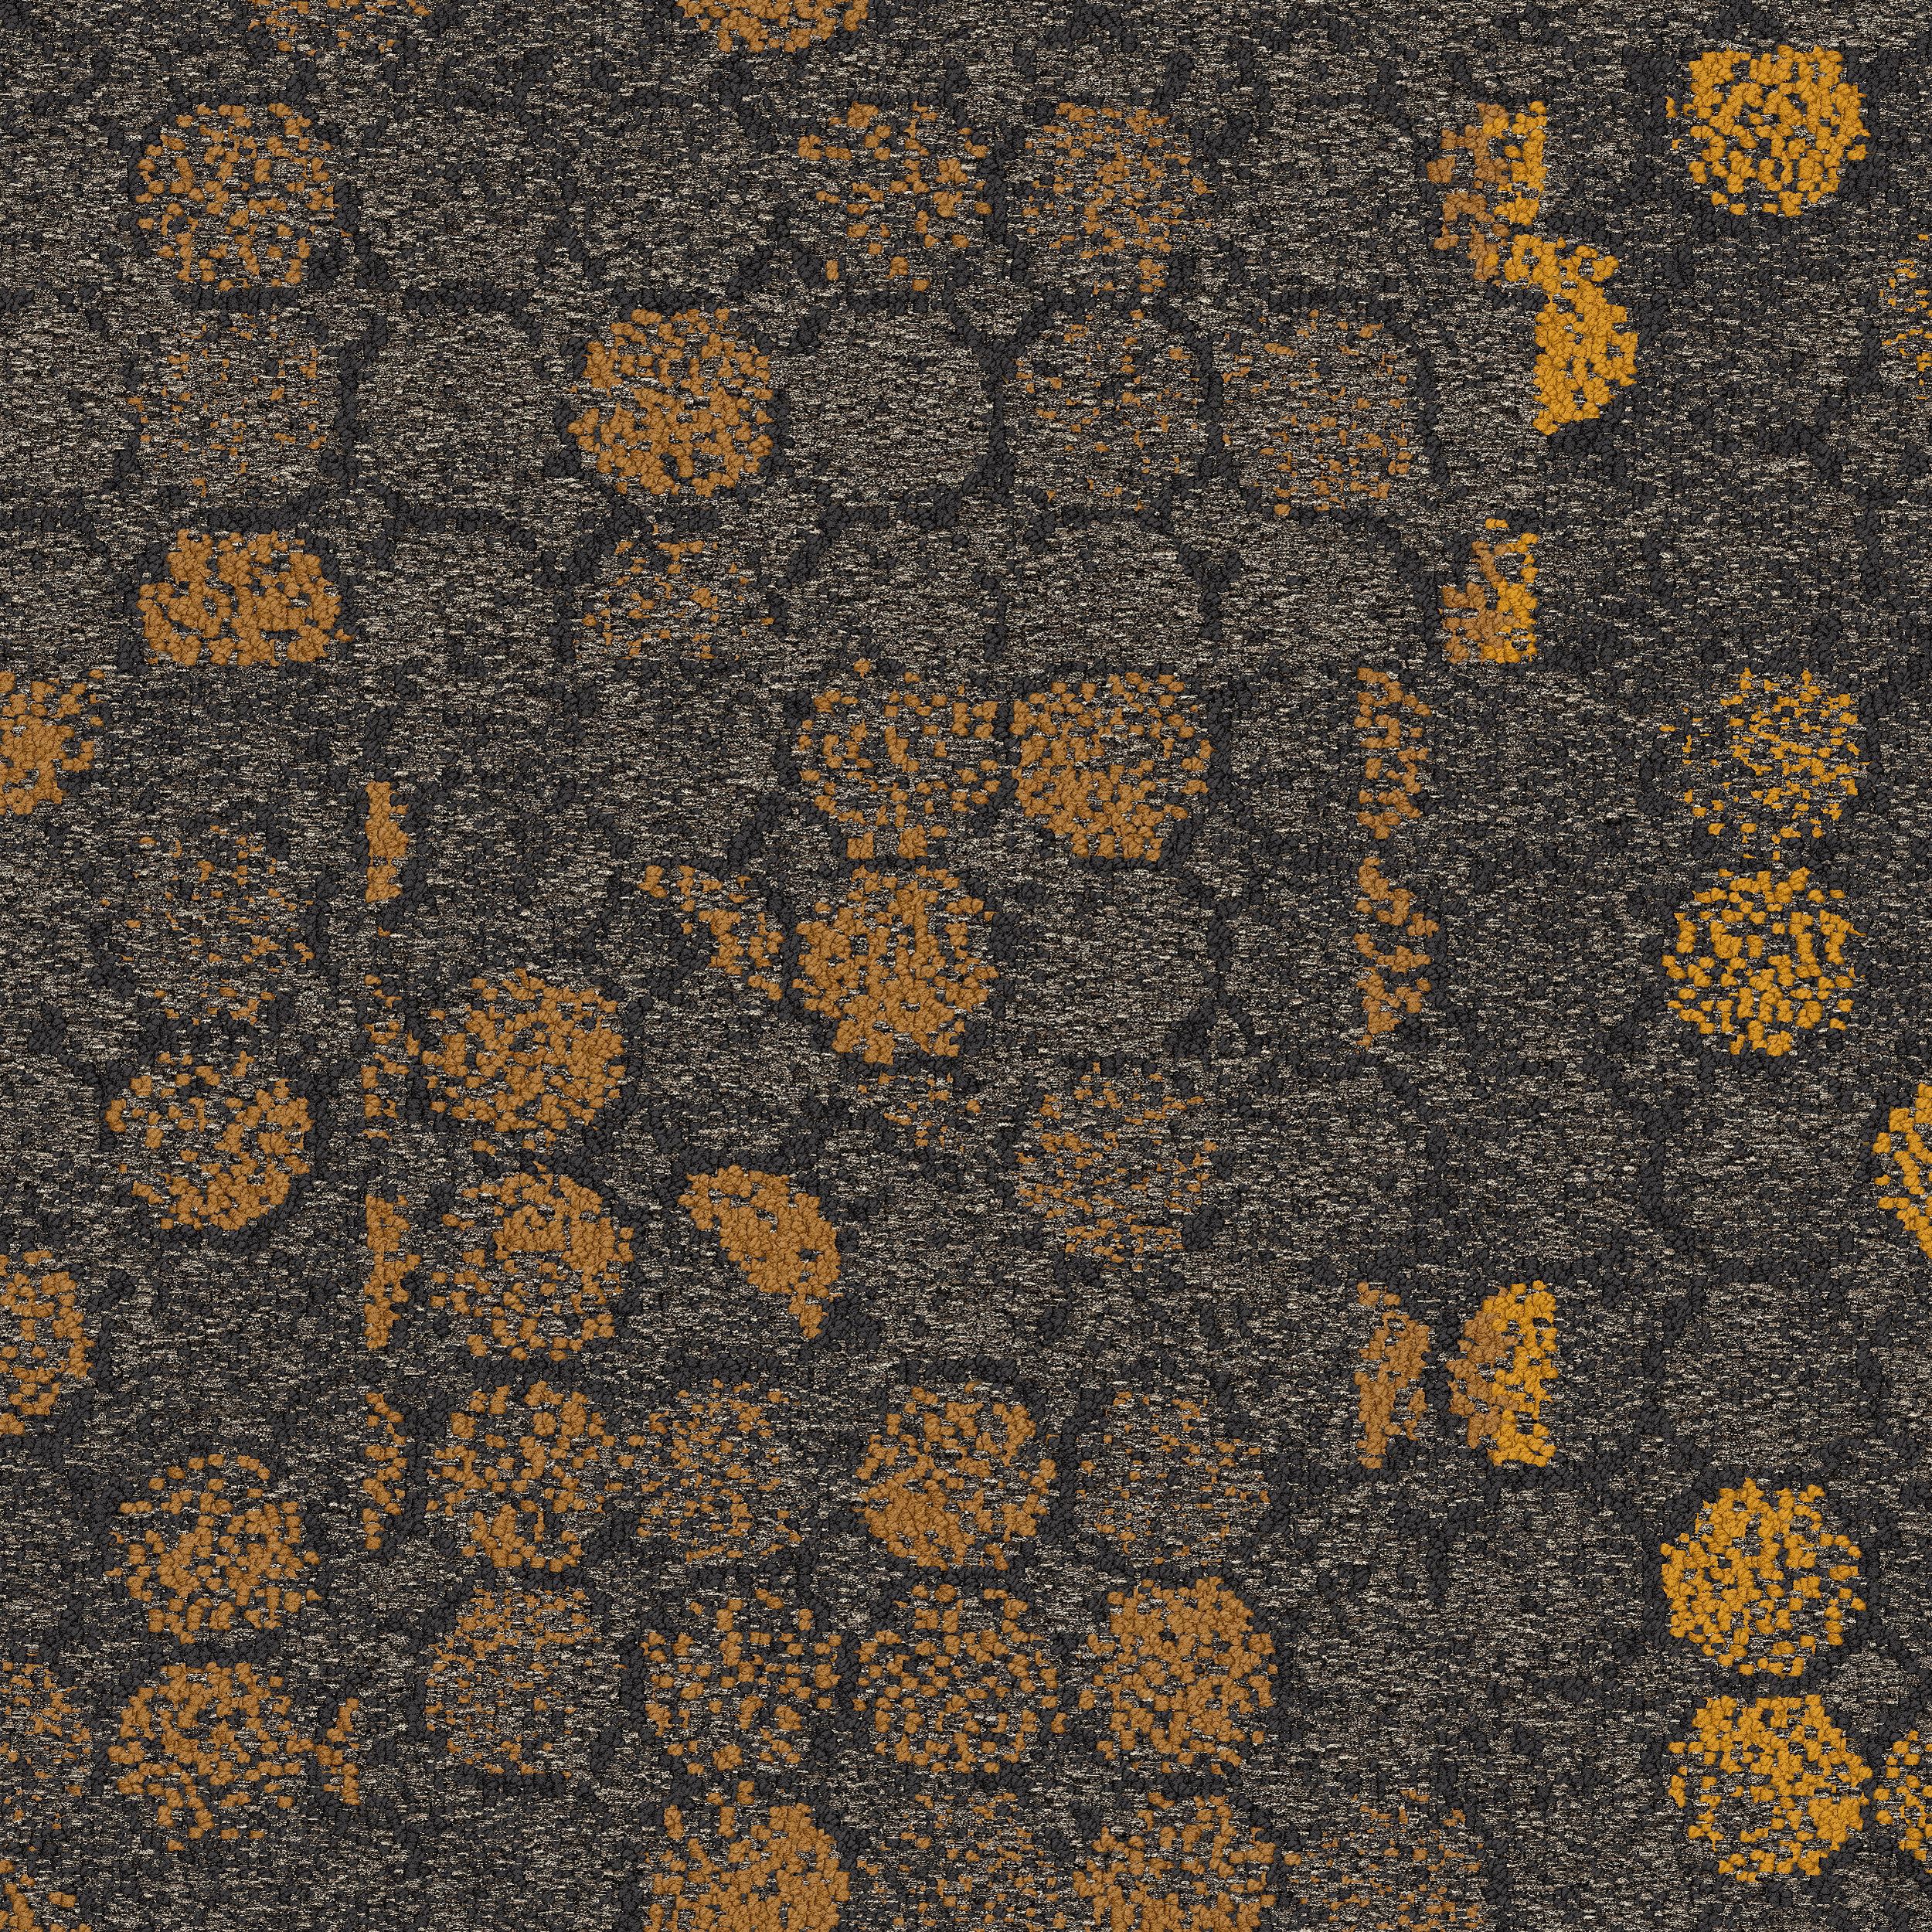 Broome Street Carpet Tile In Yellow Glass número de imagen 2